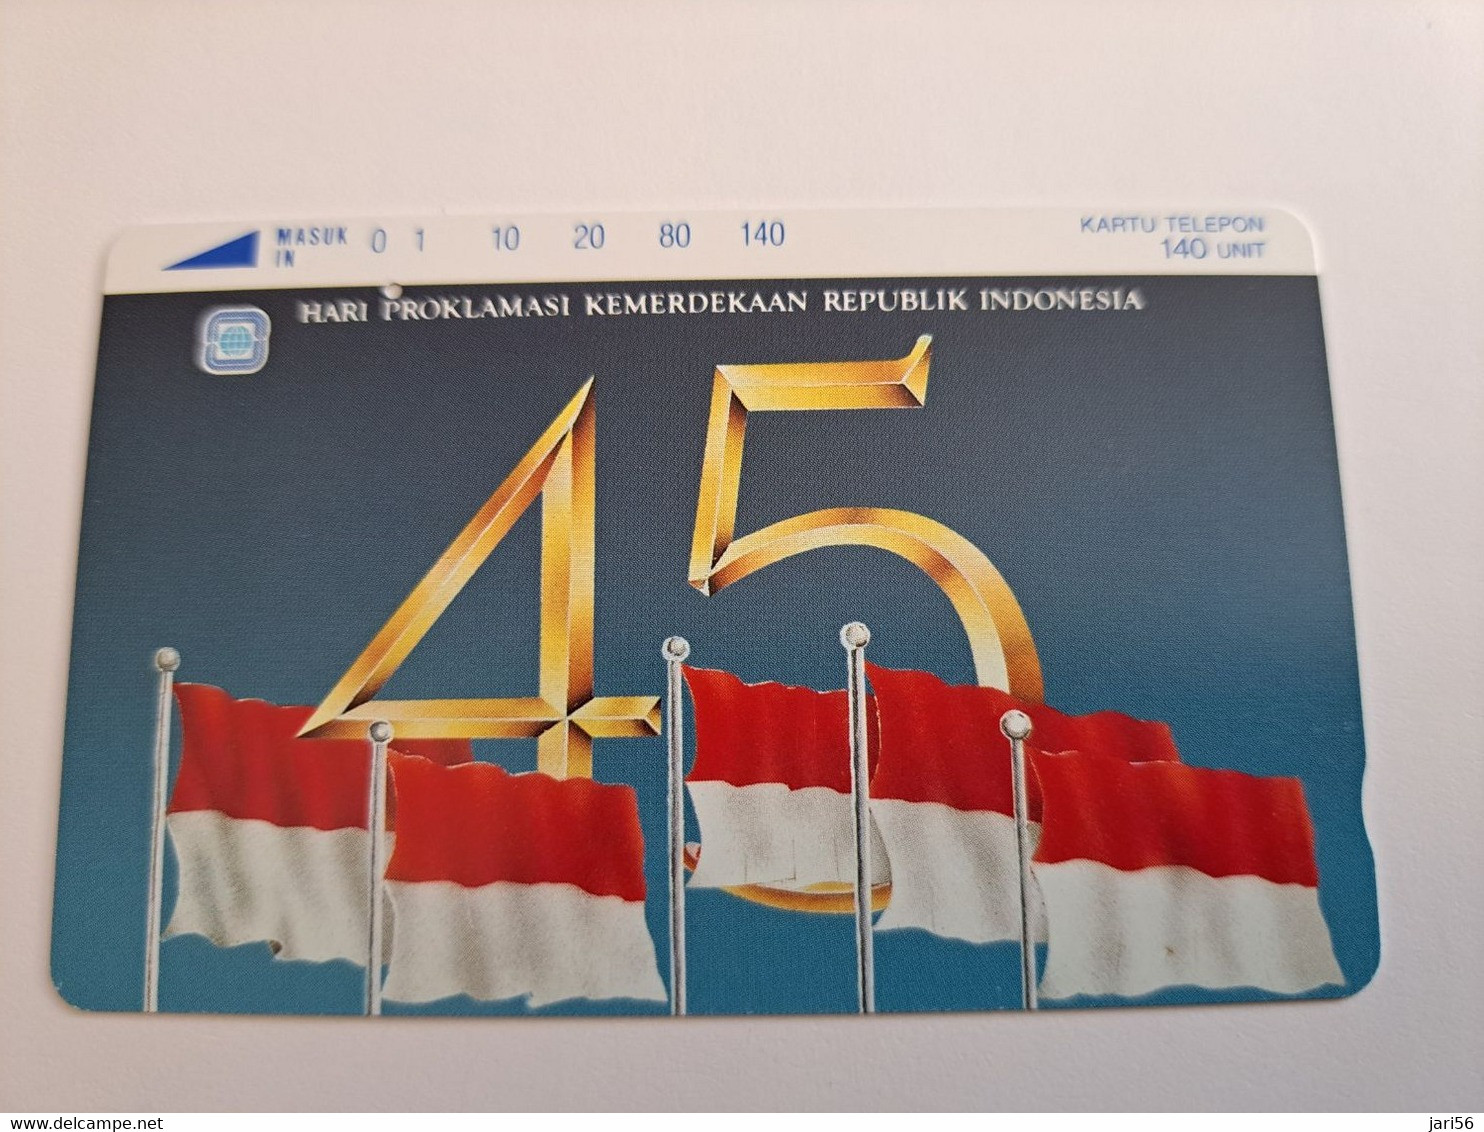 INDONESIA MAGNETIC/TAMURA  140  UNITS /   HARI PROLAMASI KEMERDEKAAN REP INDONESIA     MAGNETIC   CARD    **9796** - Indonésie